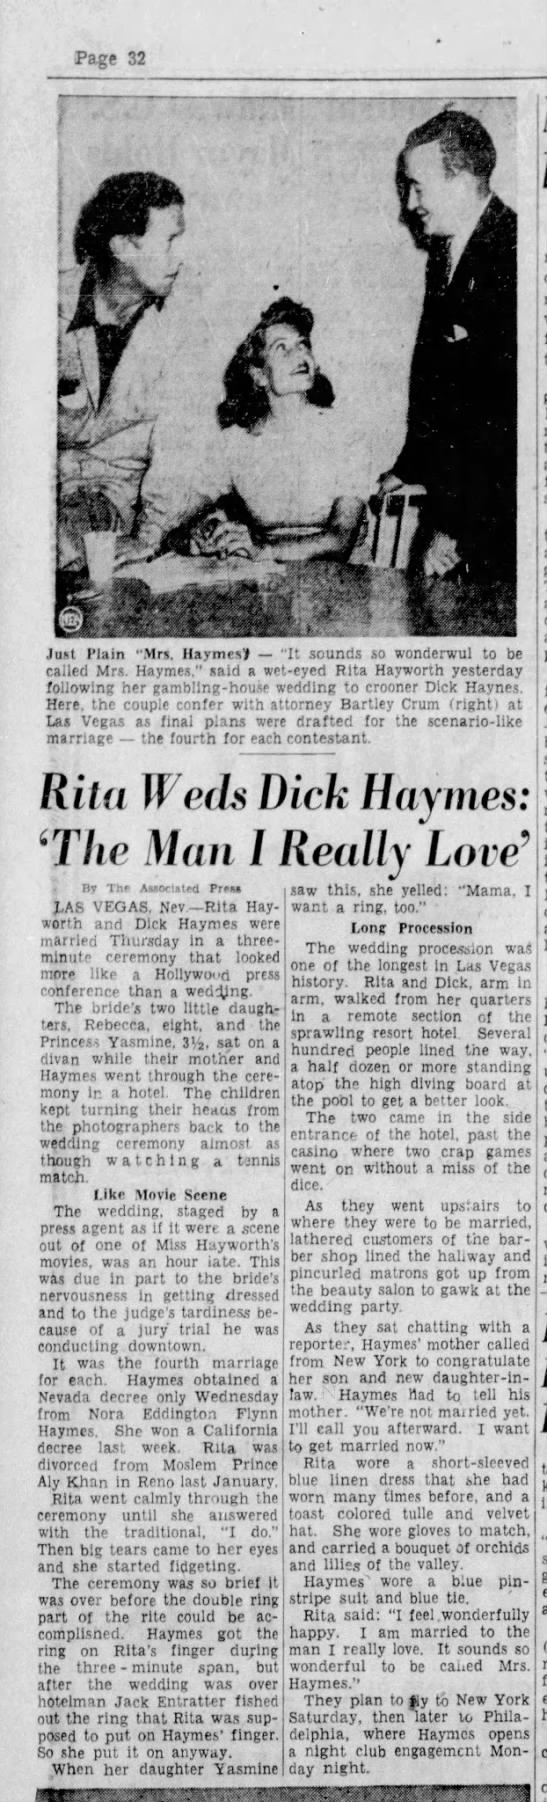 Rita Hayworth Haymes - 